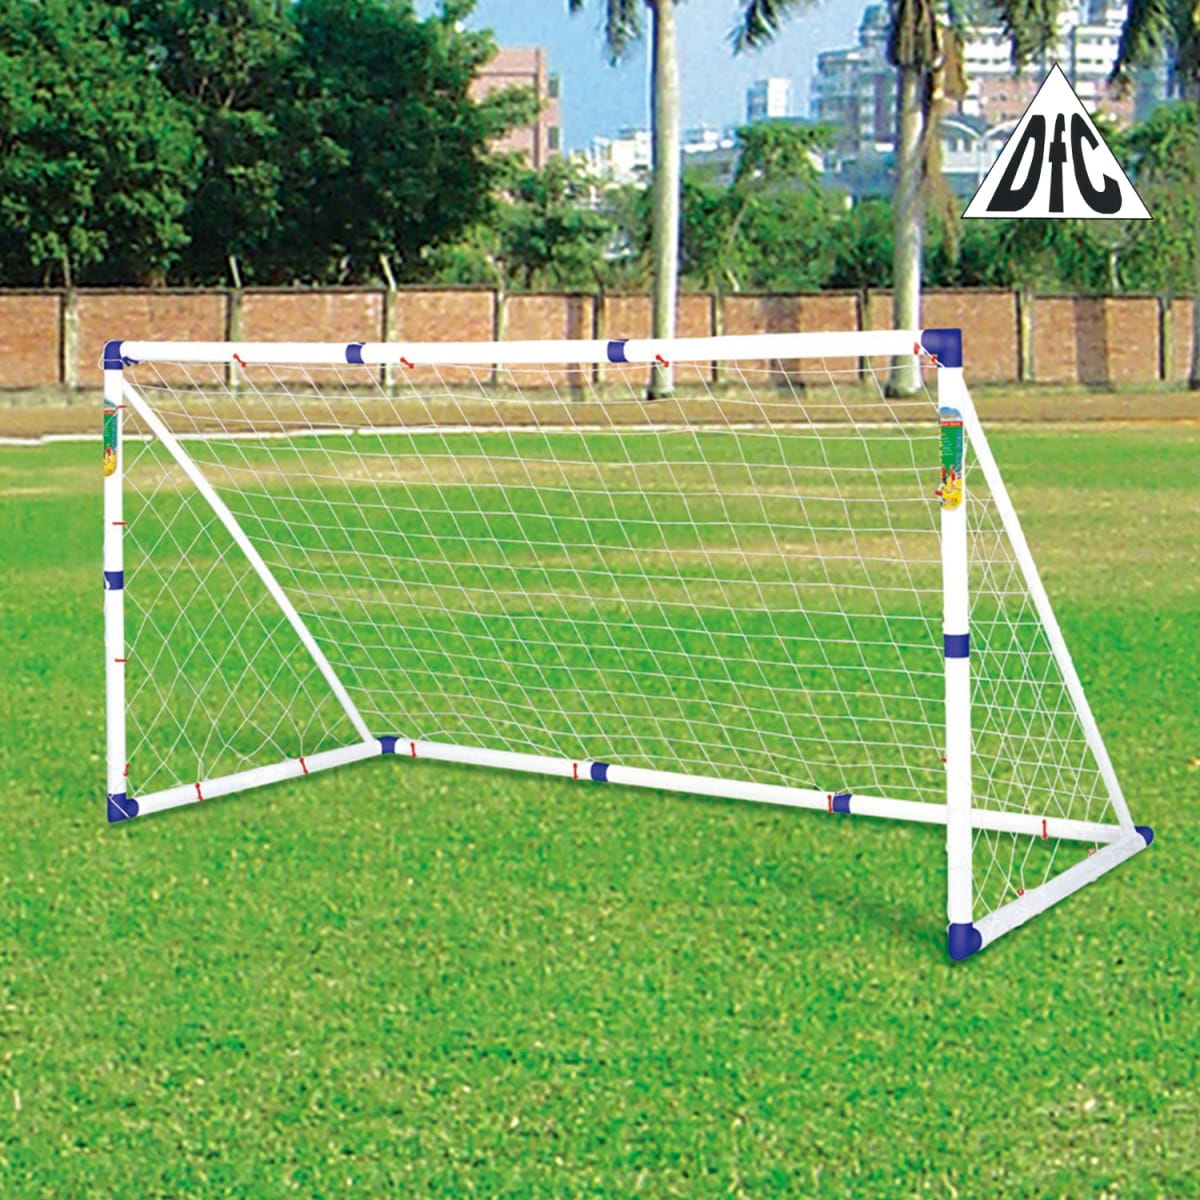    DFC Super Soccer Goal250A